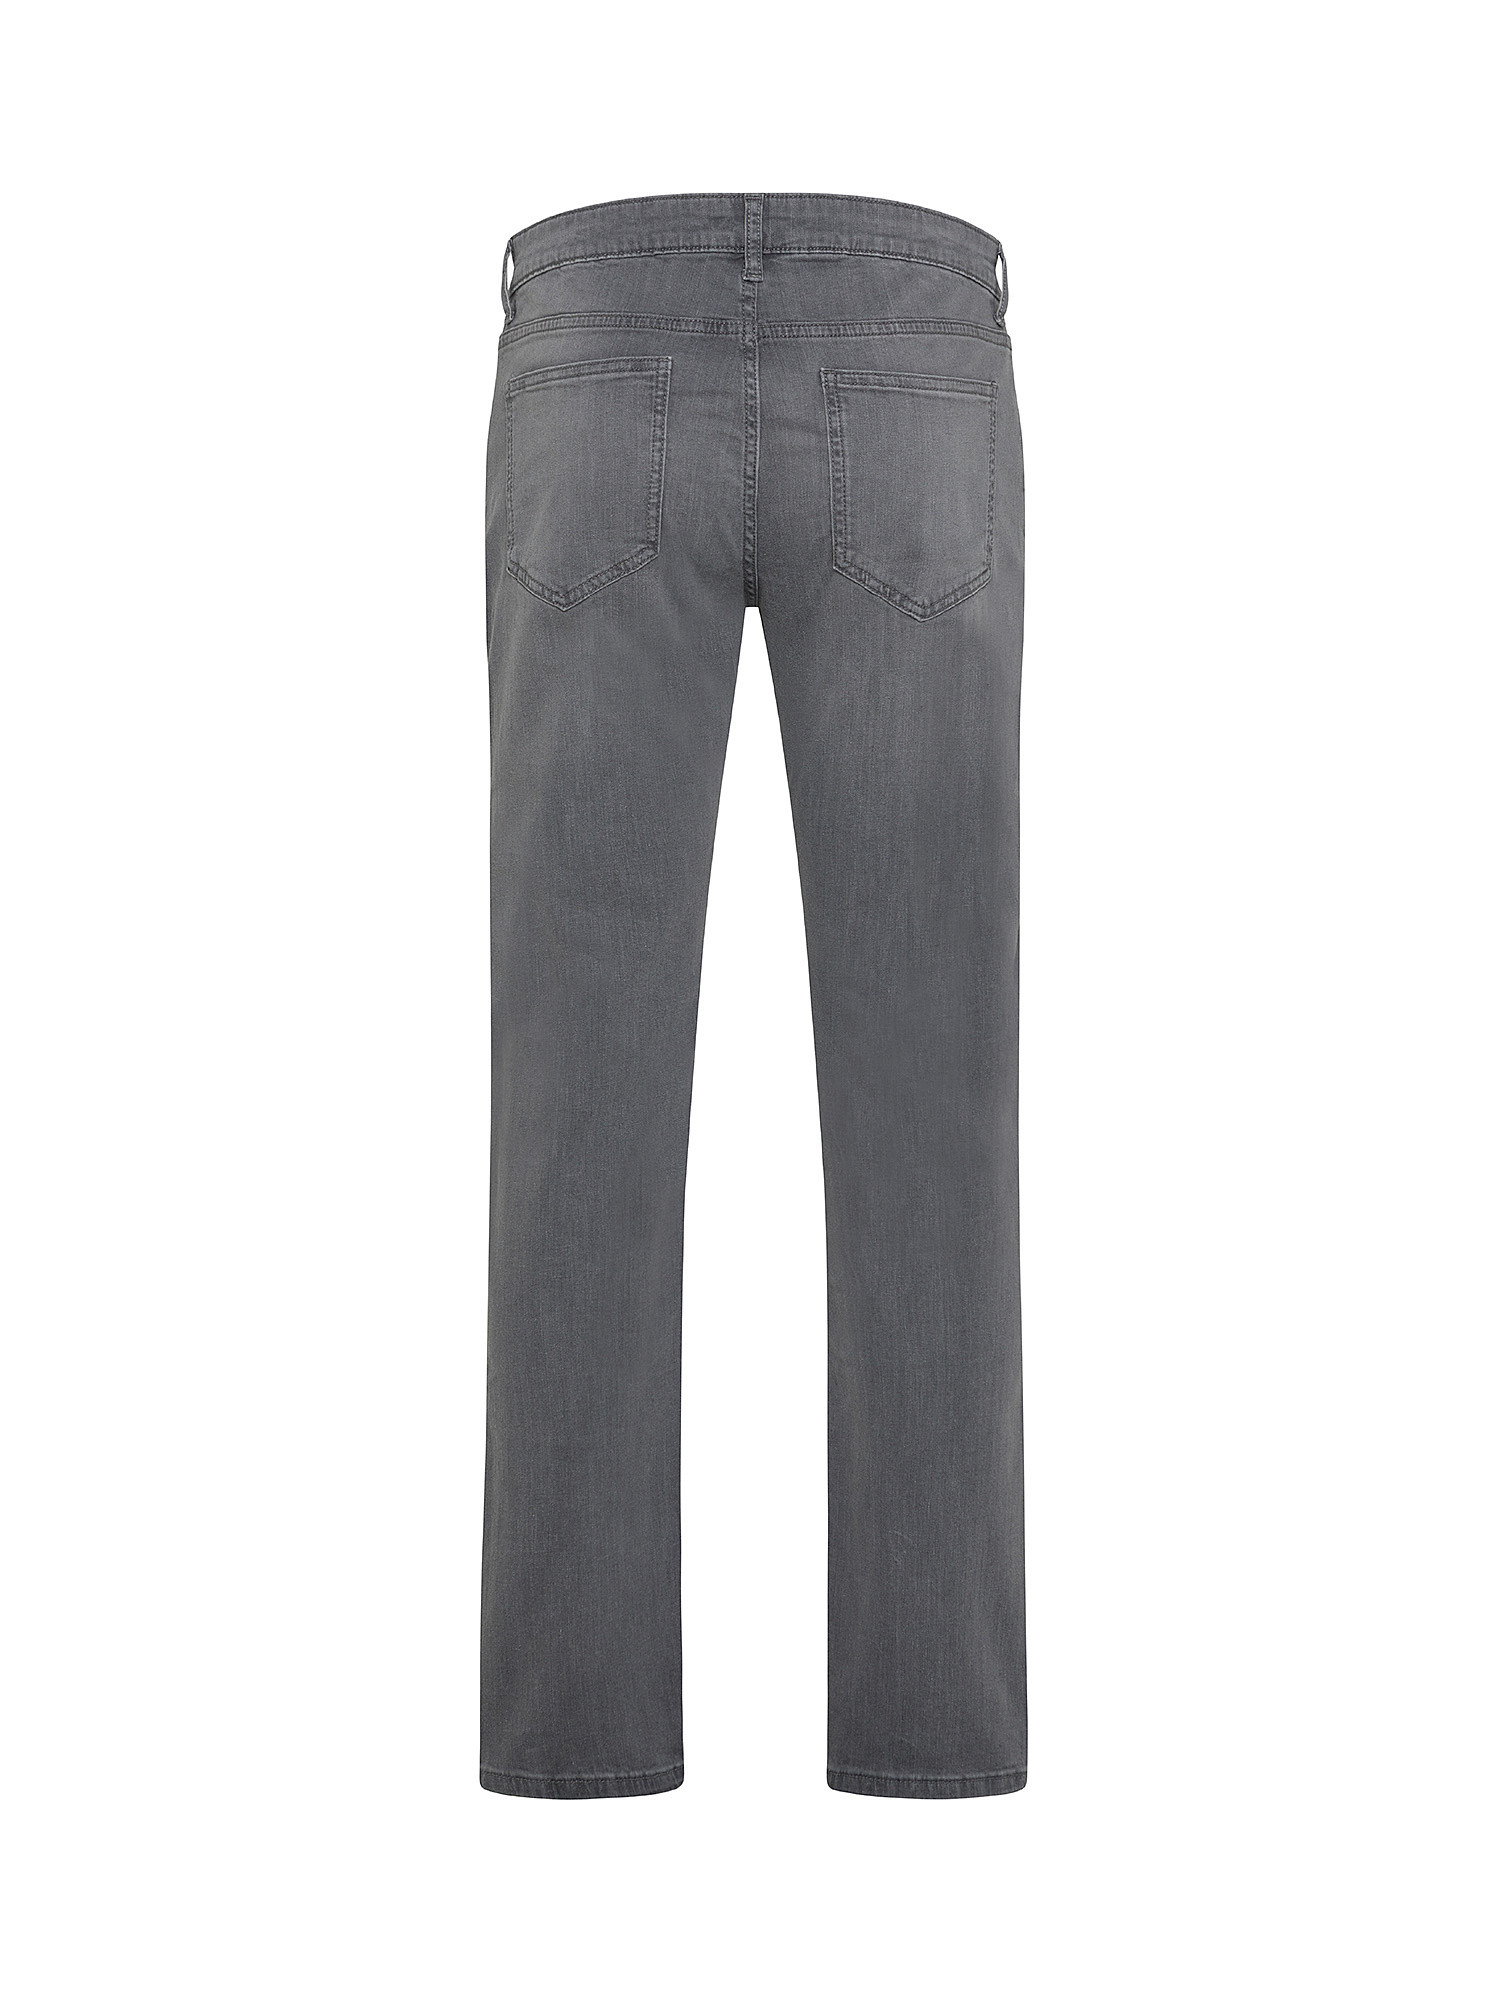 JCT - Jeans cinque tasche, Grigio, large image number 1